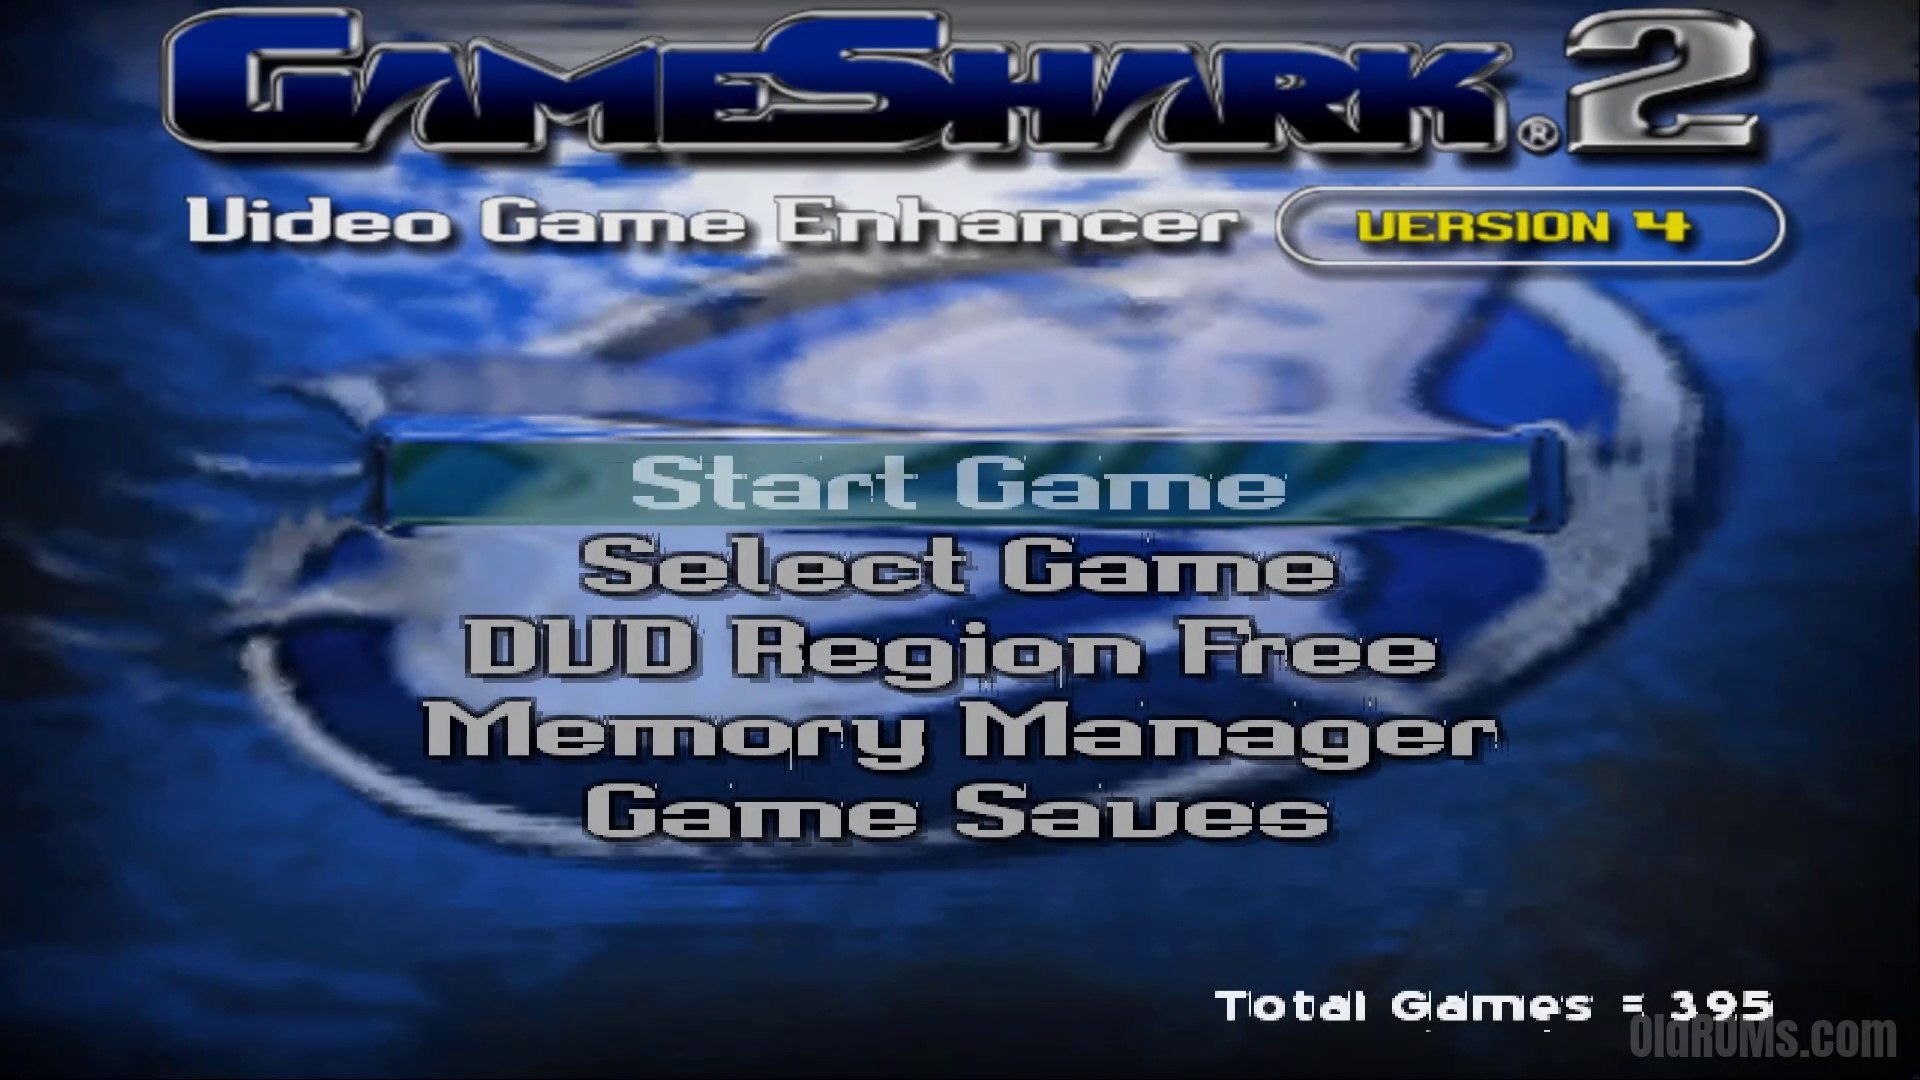 Gameshark V4 (USA) Sony PlayStation 2 (PS2) ISO Download - RomUlation